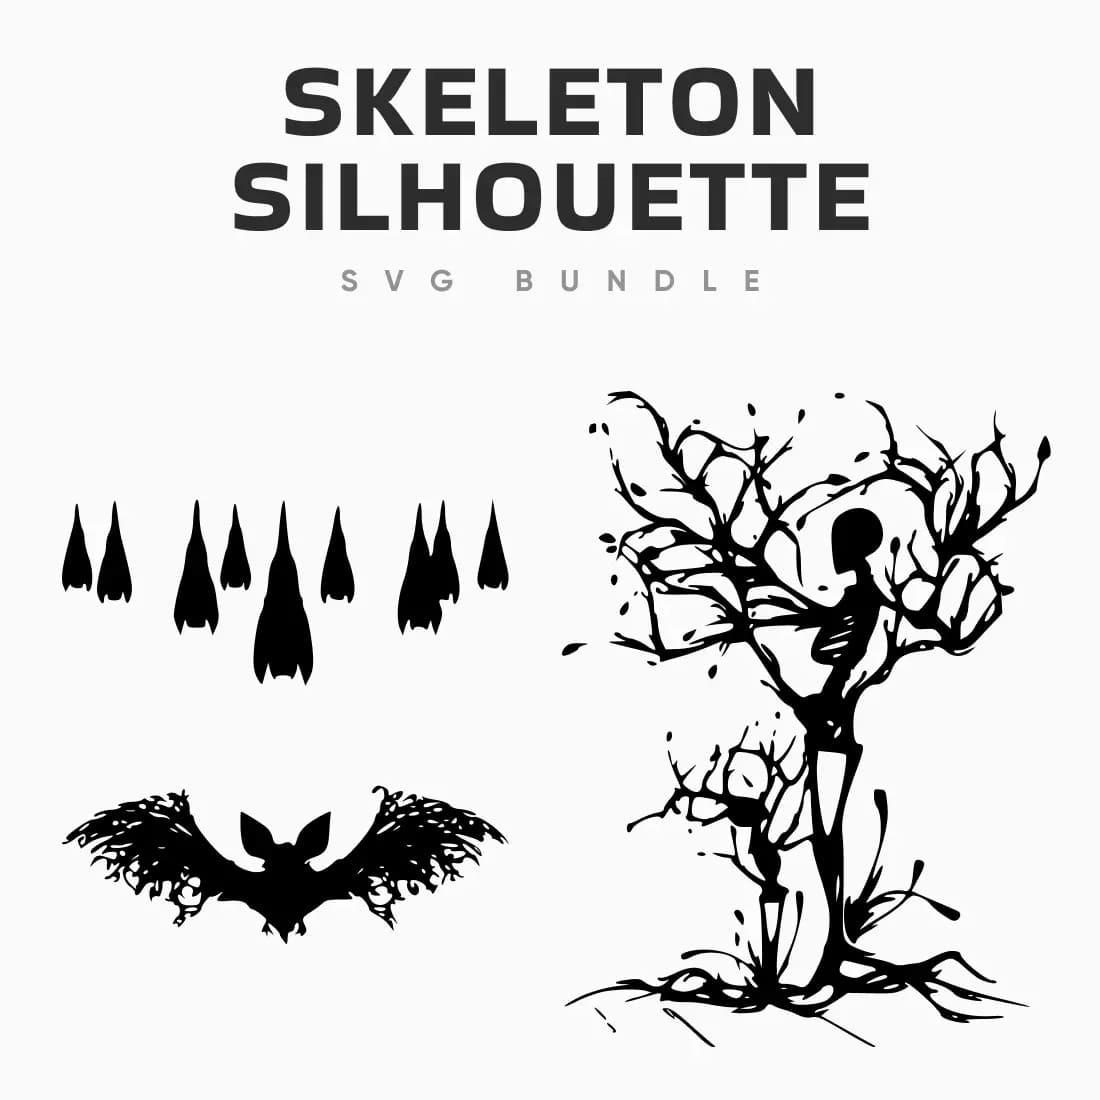 Skeleton Silhouette SVG Bundle Preview 3.